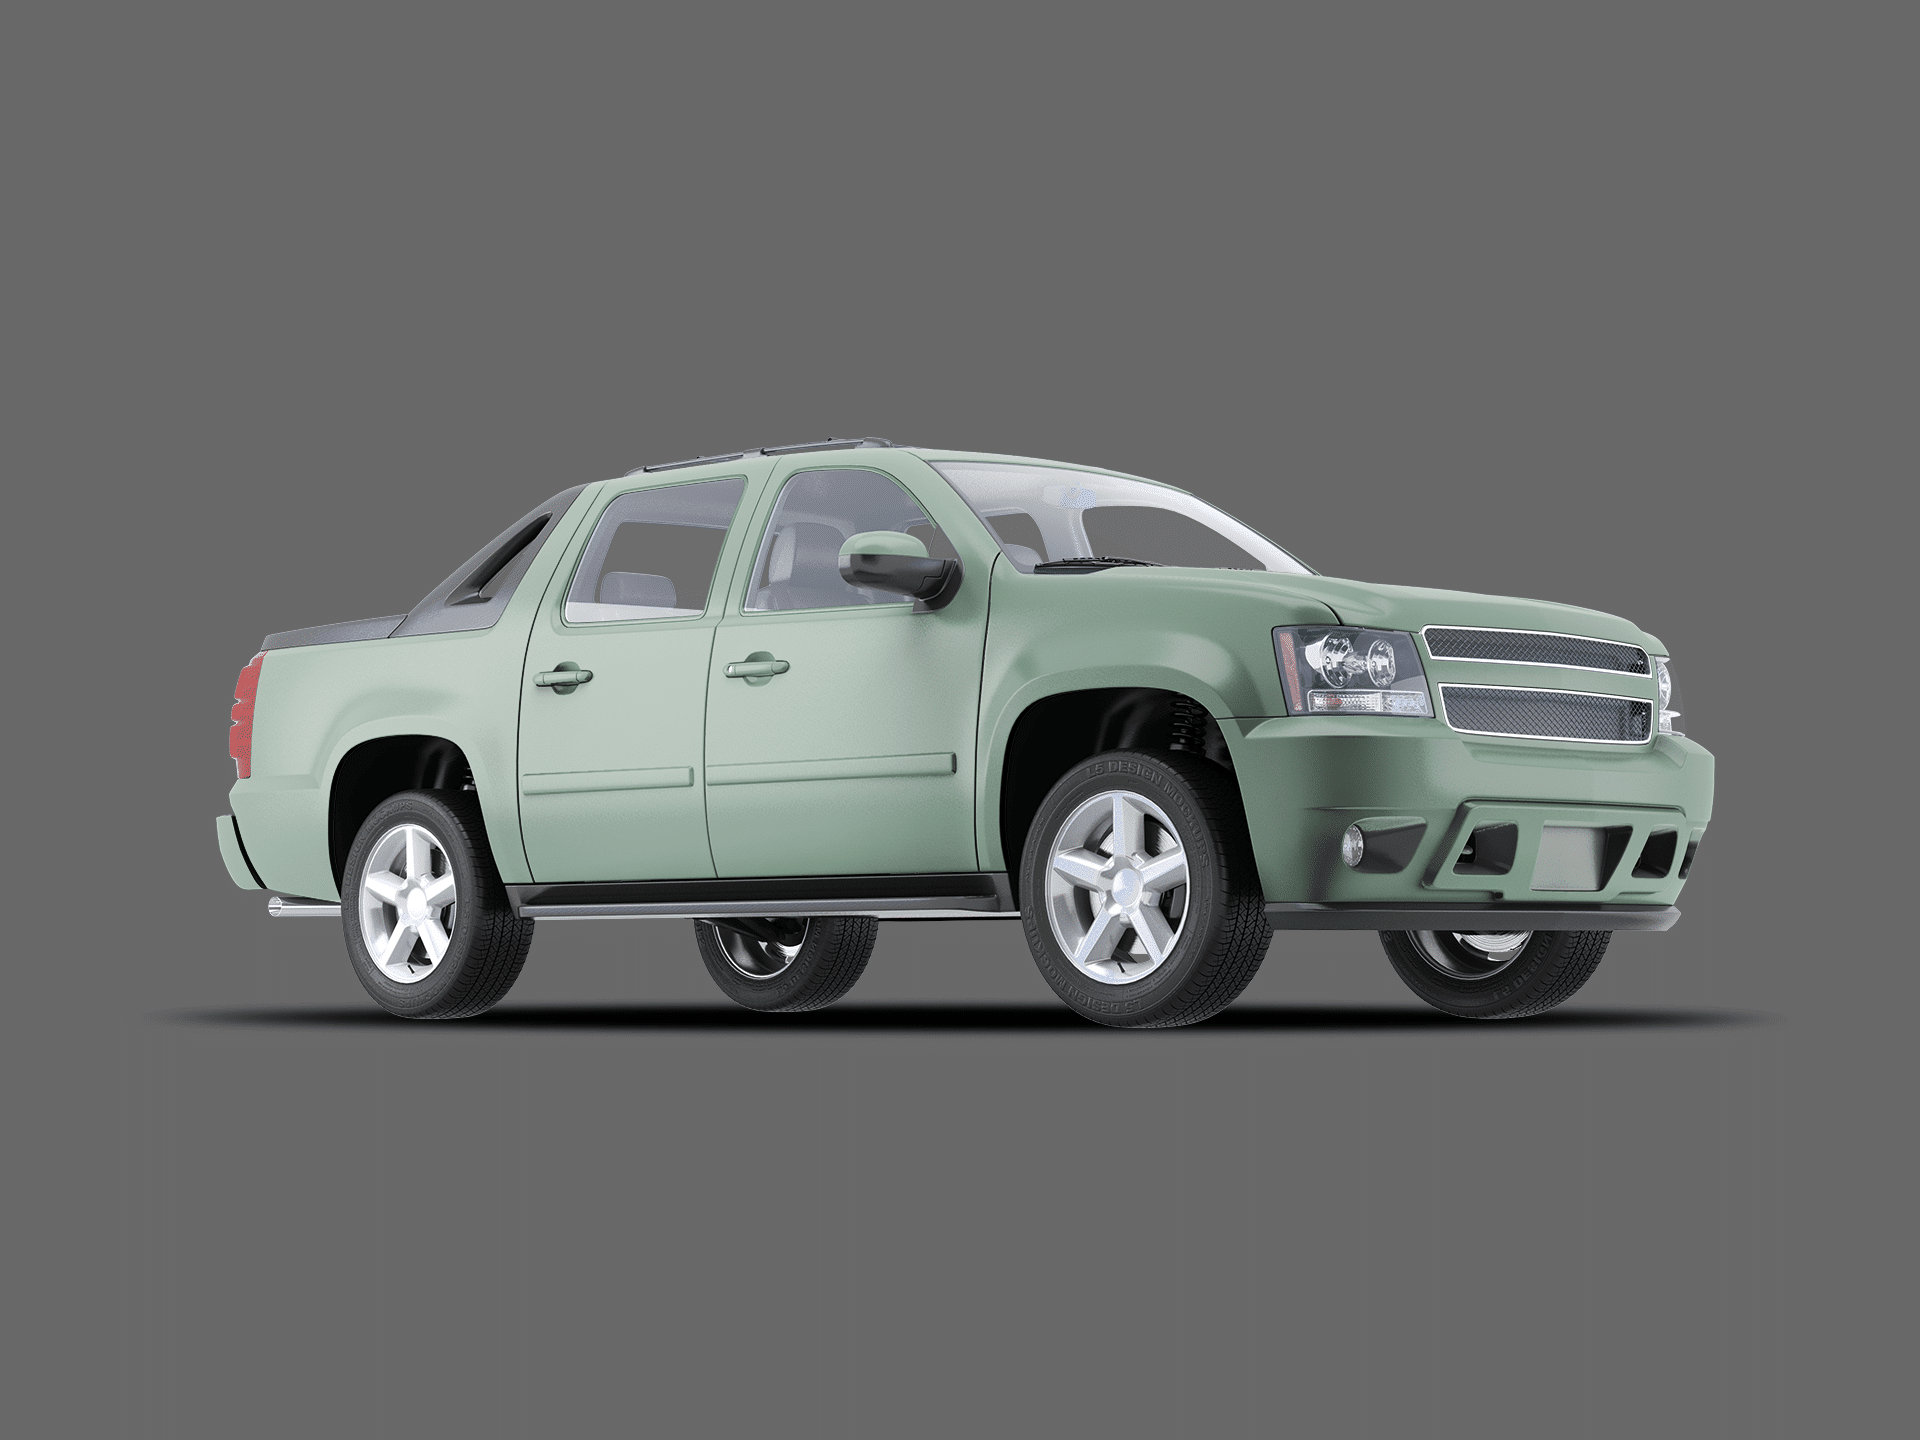 full-vehicle-wrap-mockup-featuring-a-pickup-truck-3597-el1 (1)